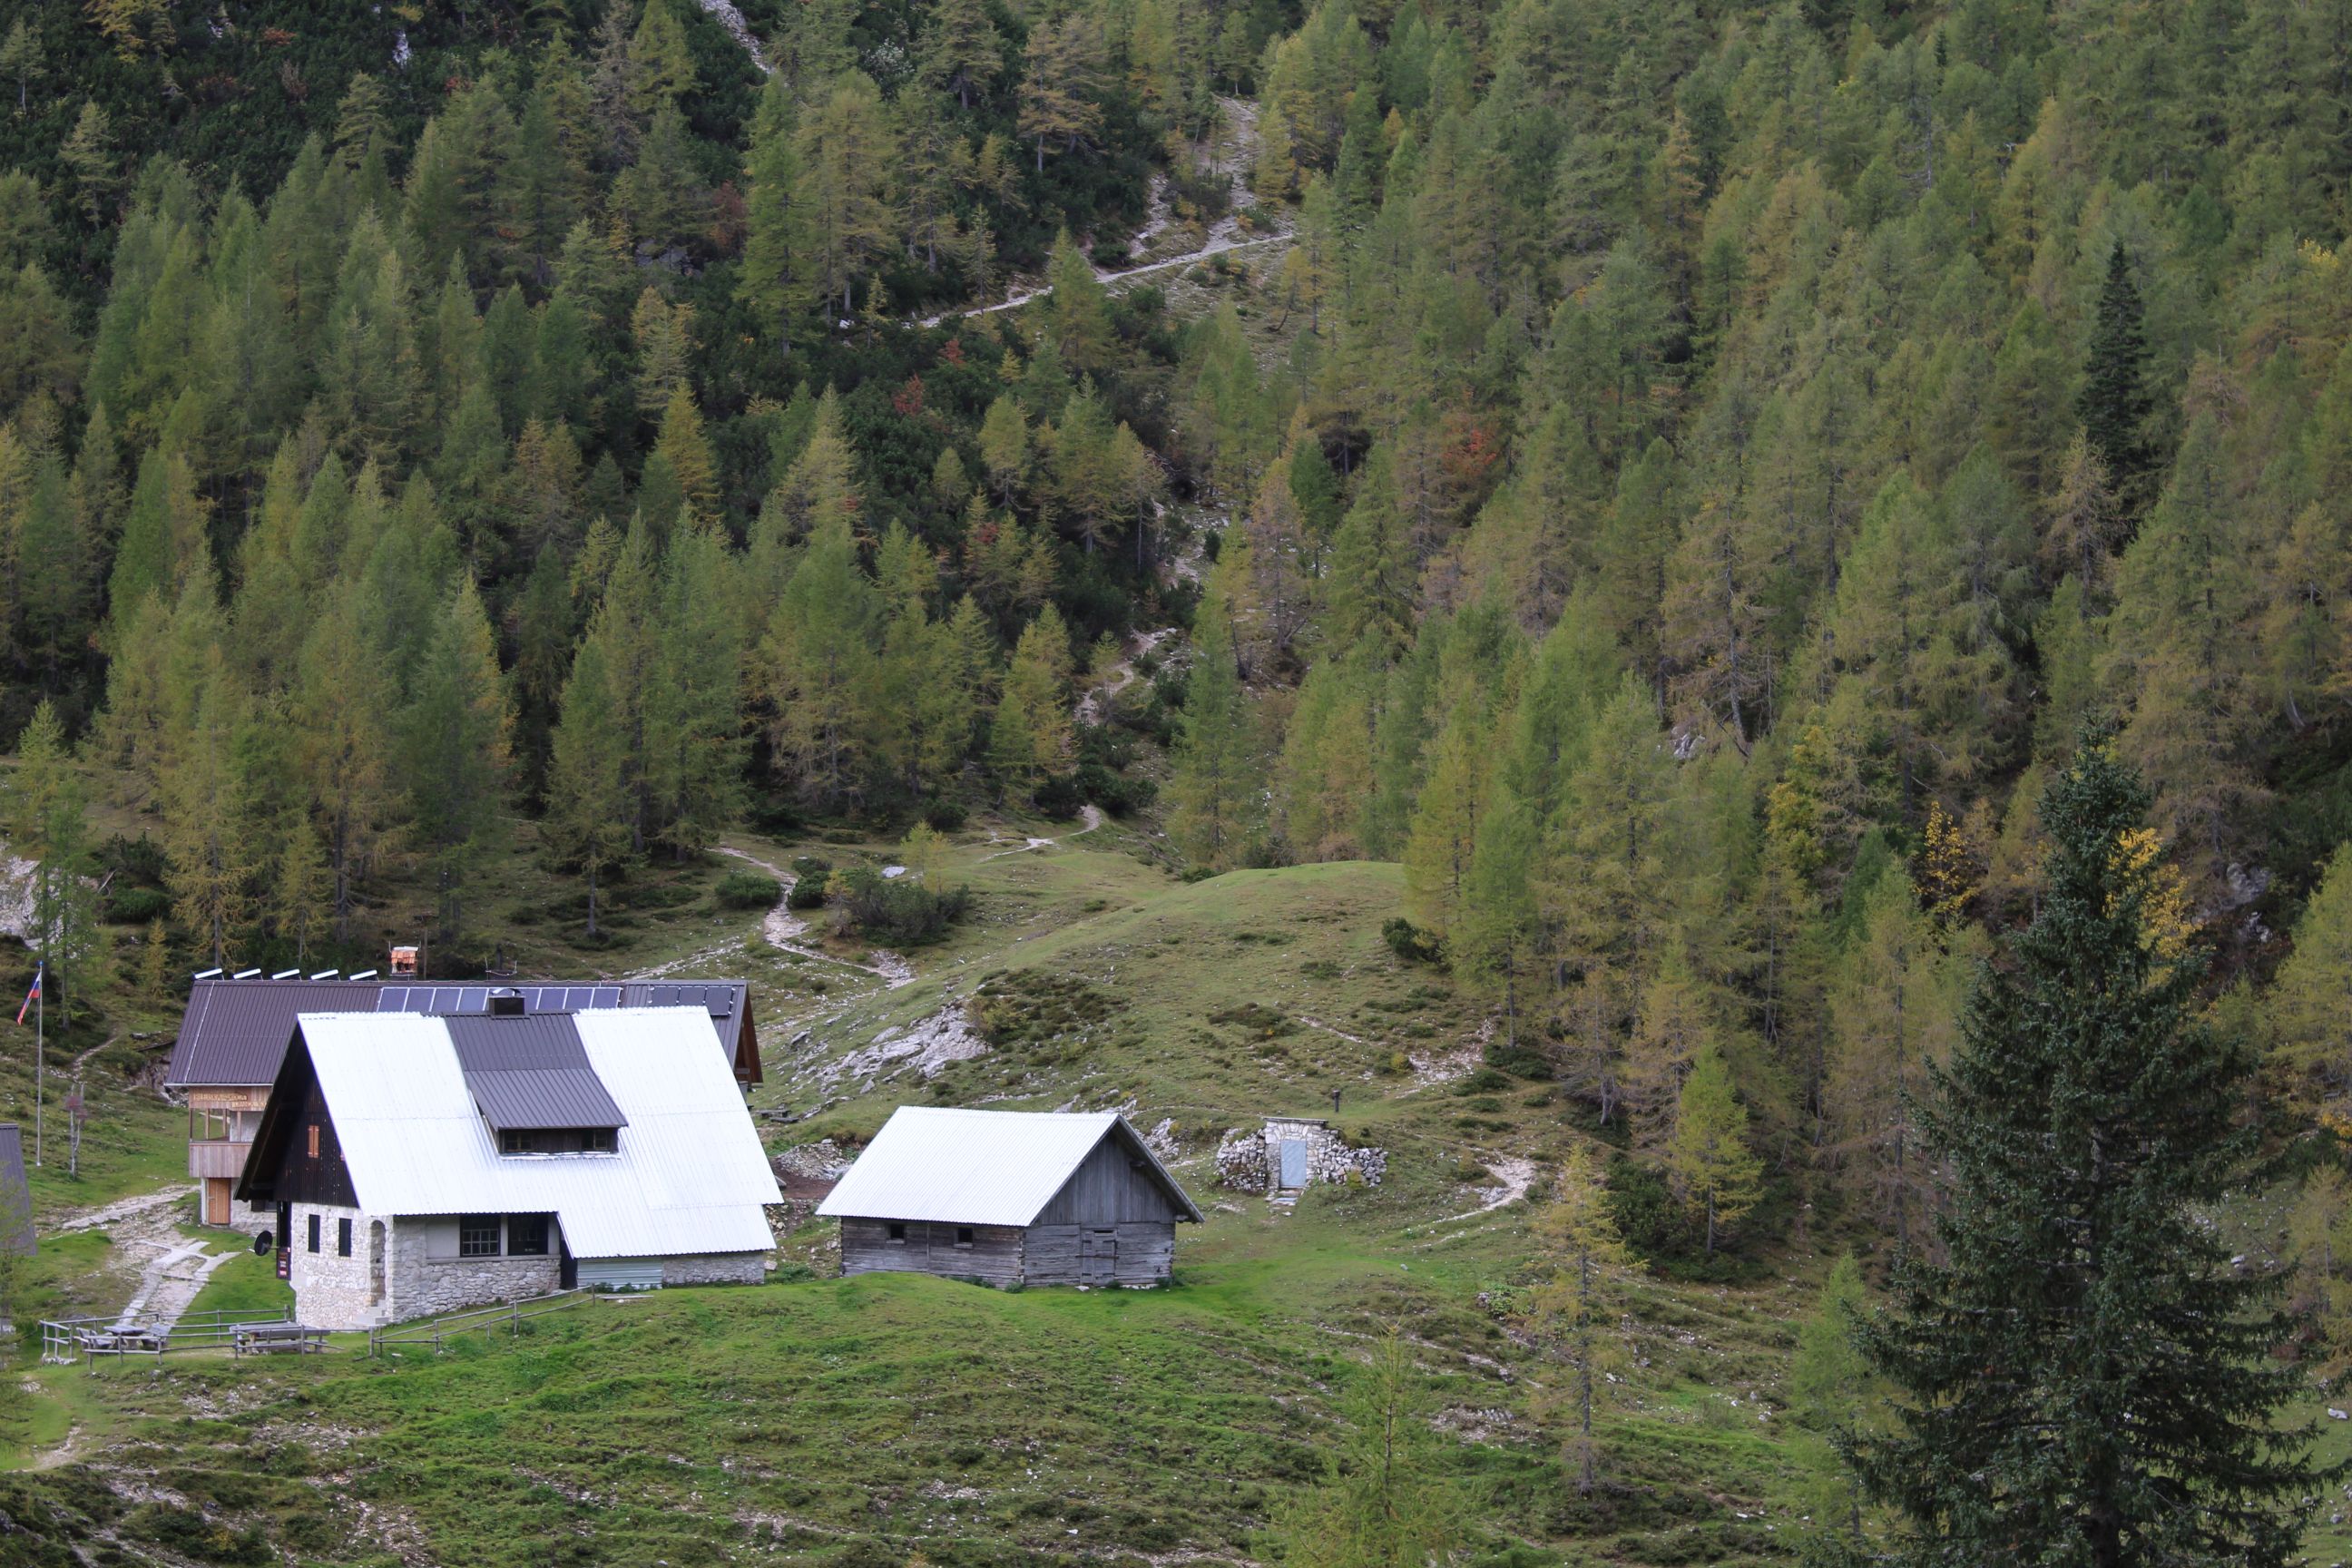 The Blejska Koča Mountain Hut in Slovenia, surrounded by pine forest.